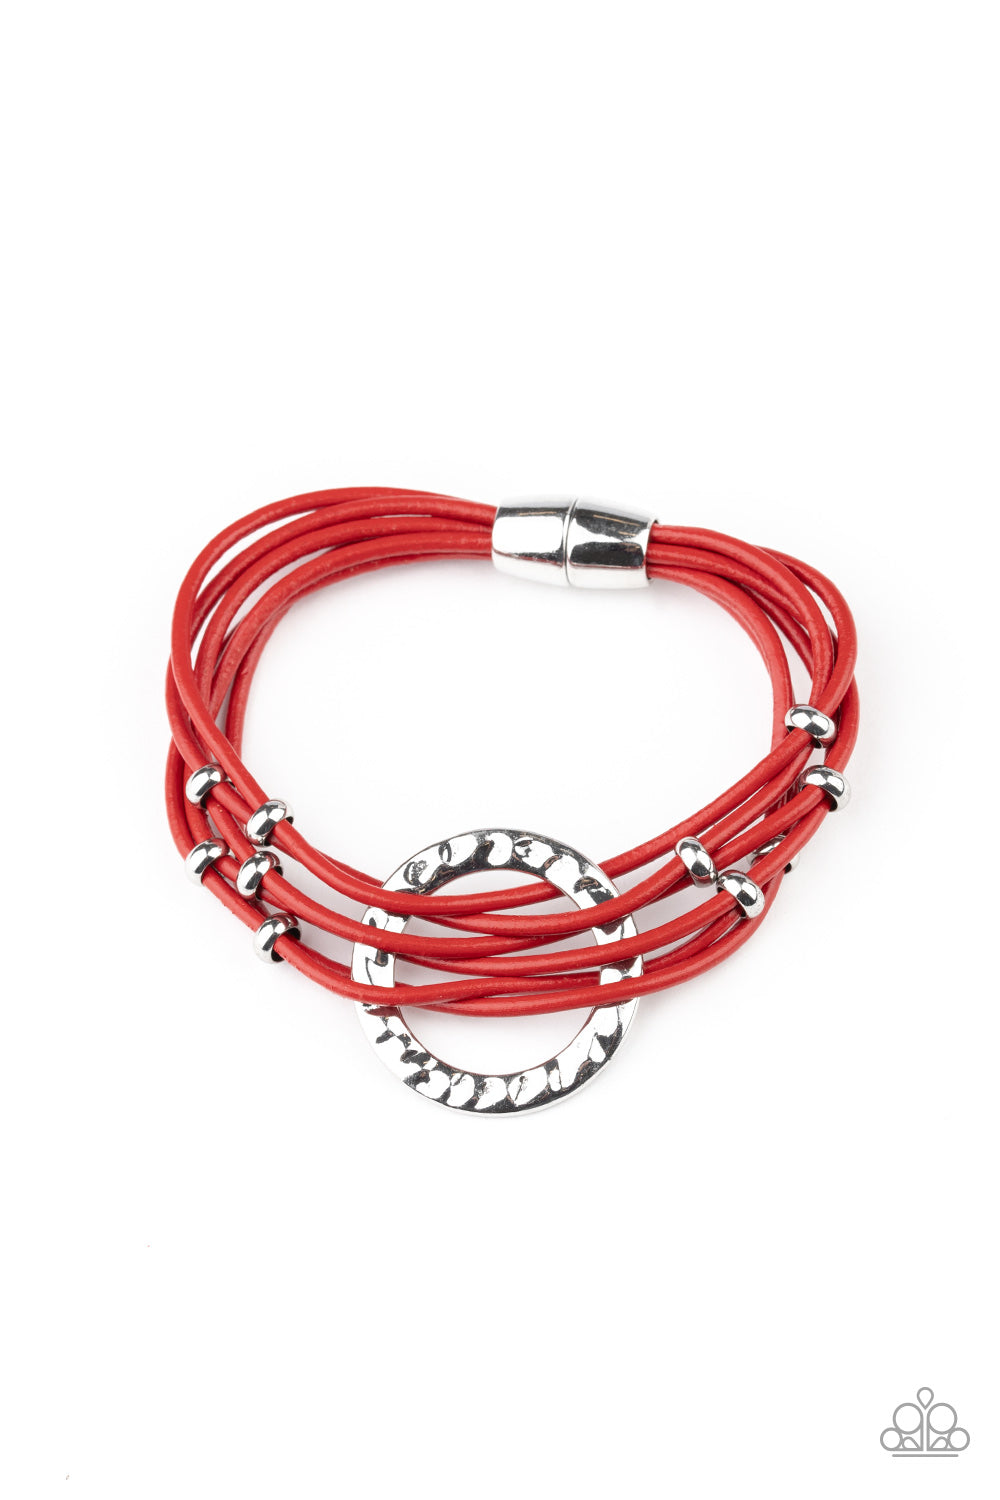 Buy Diamond Charm Bracelet Red String Bracelet Minimalist Jewelry Dainty Bracelet  Online in India - Etsy